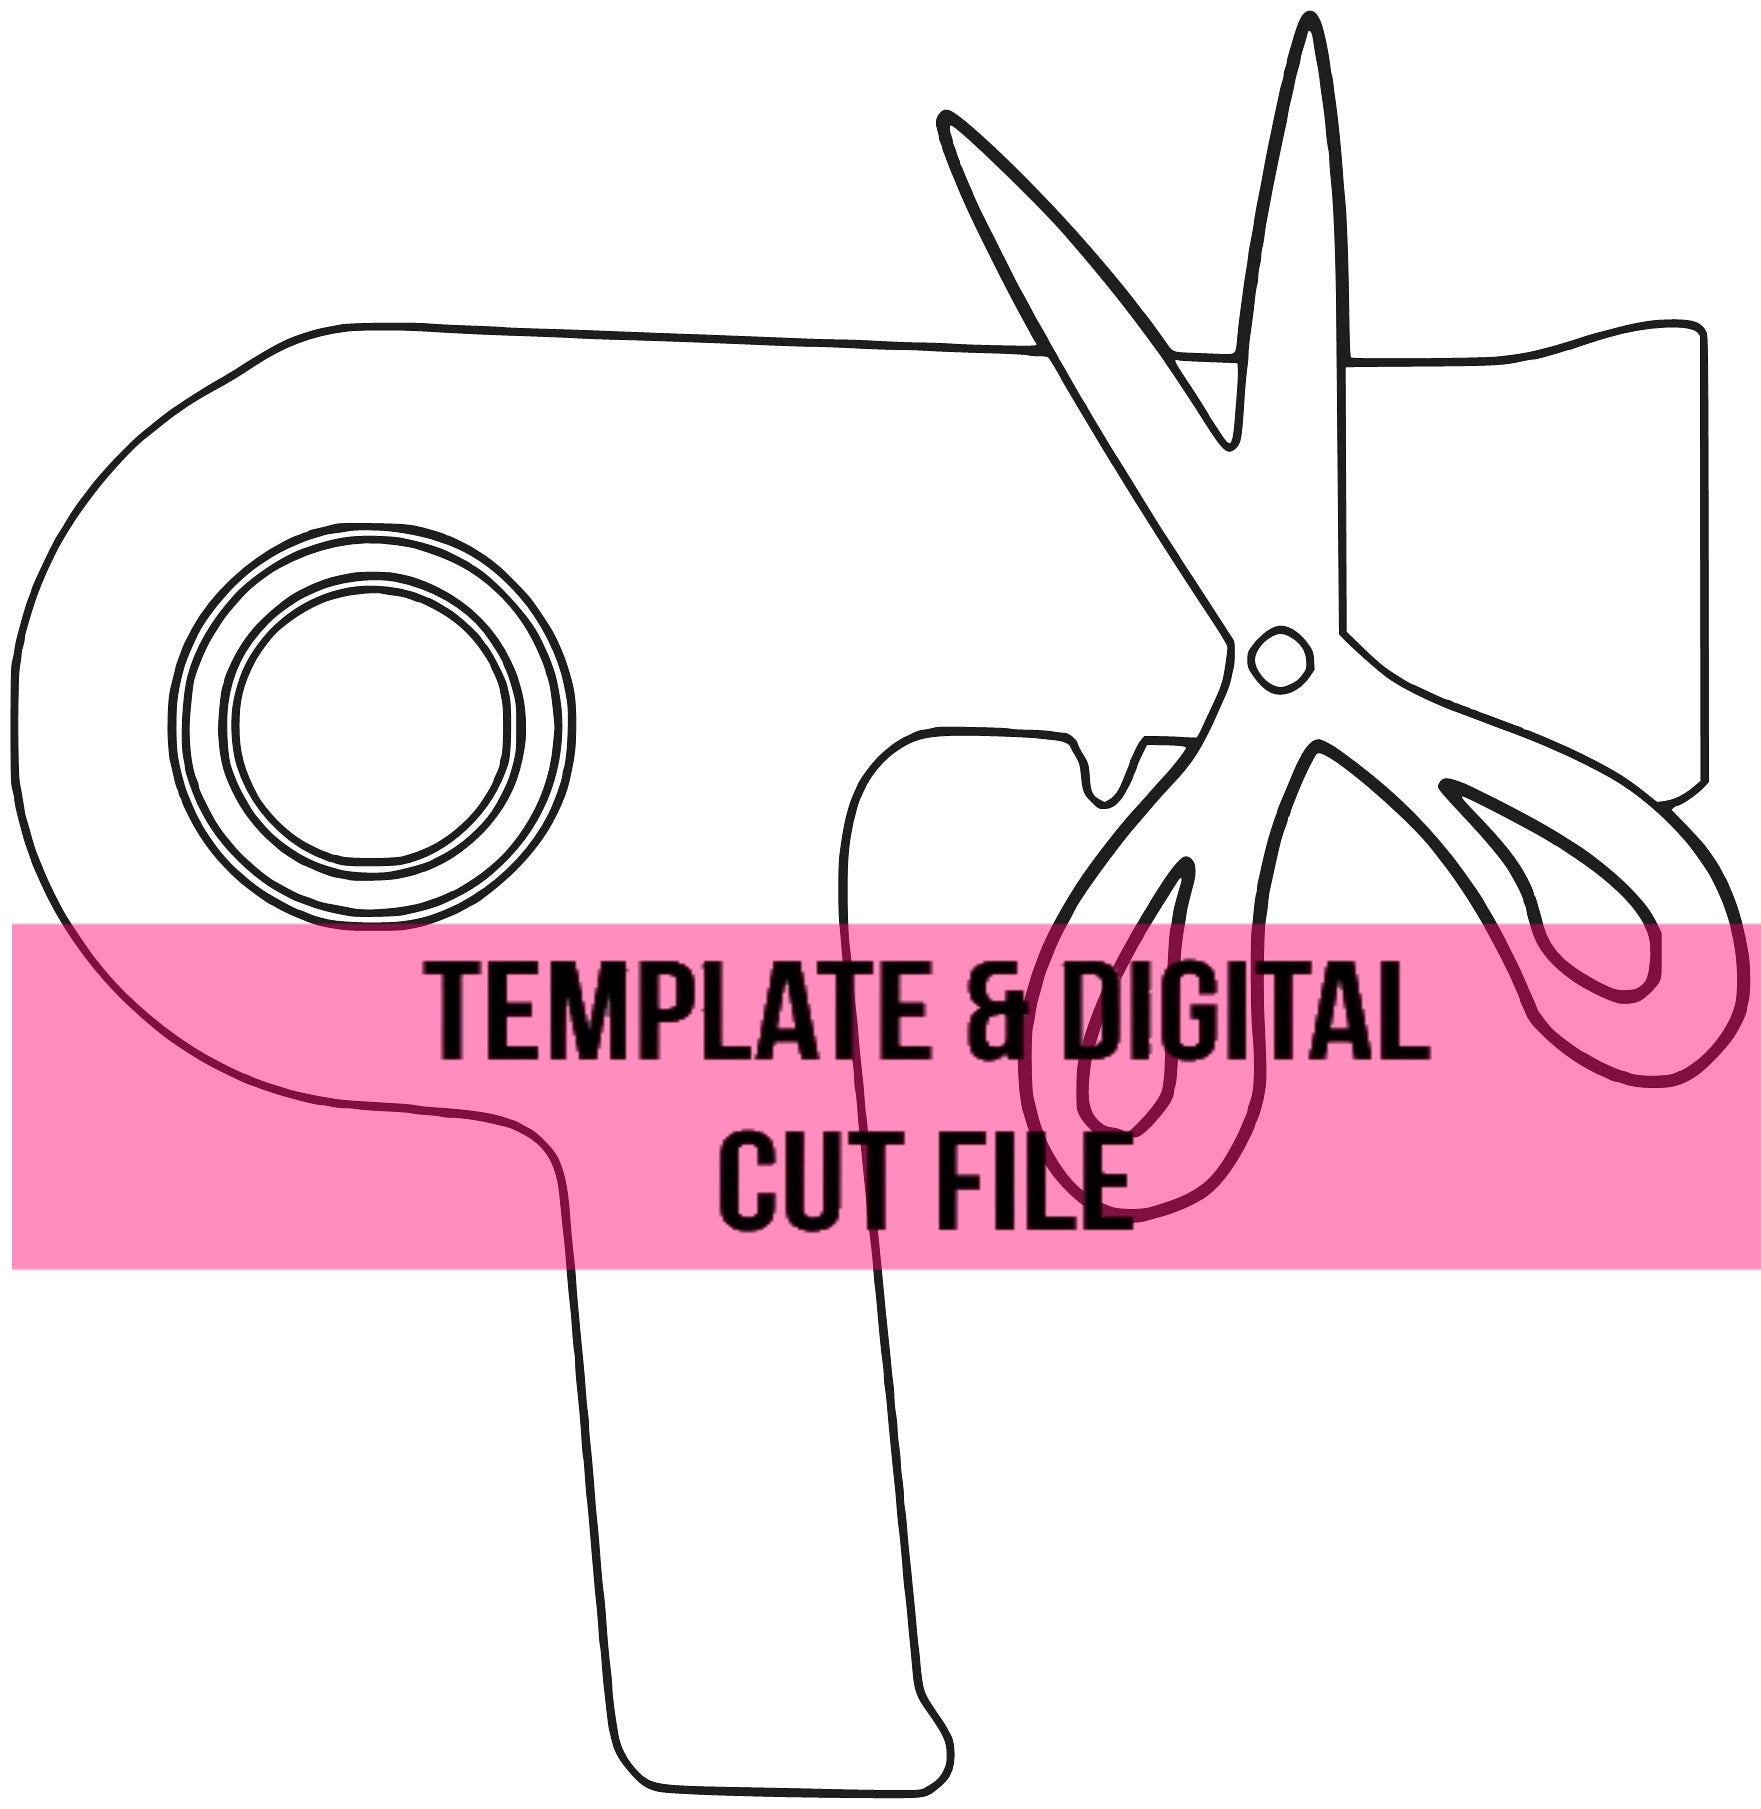 Hairdresser Tools Template & Digital Cut File